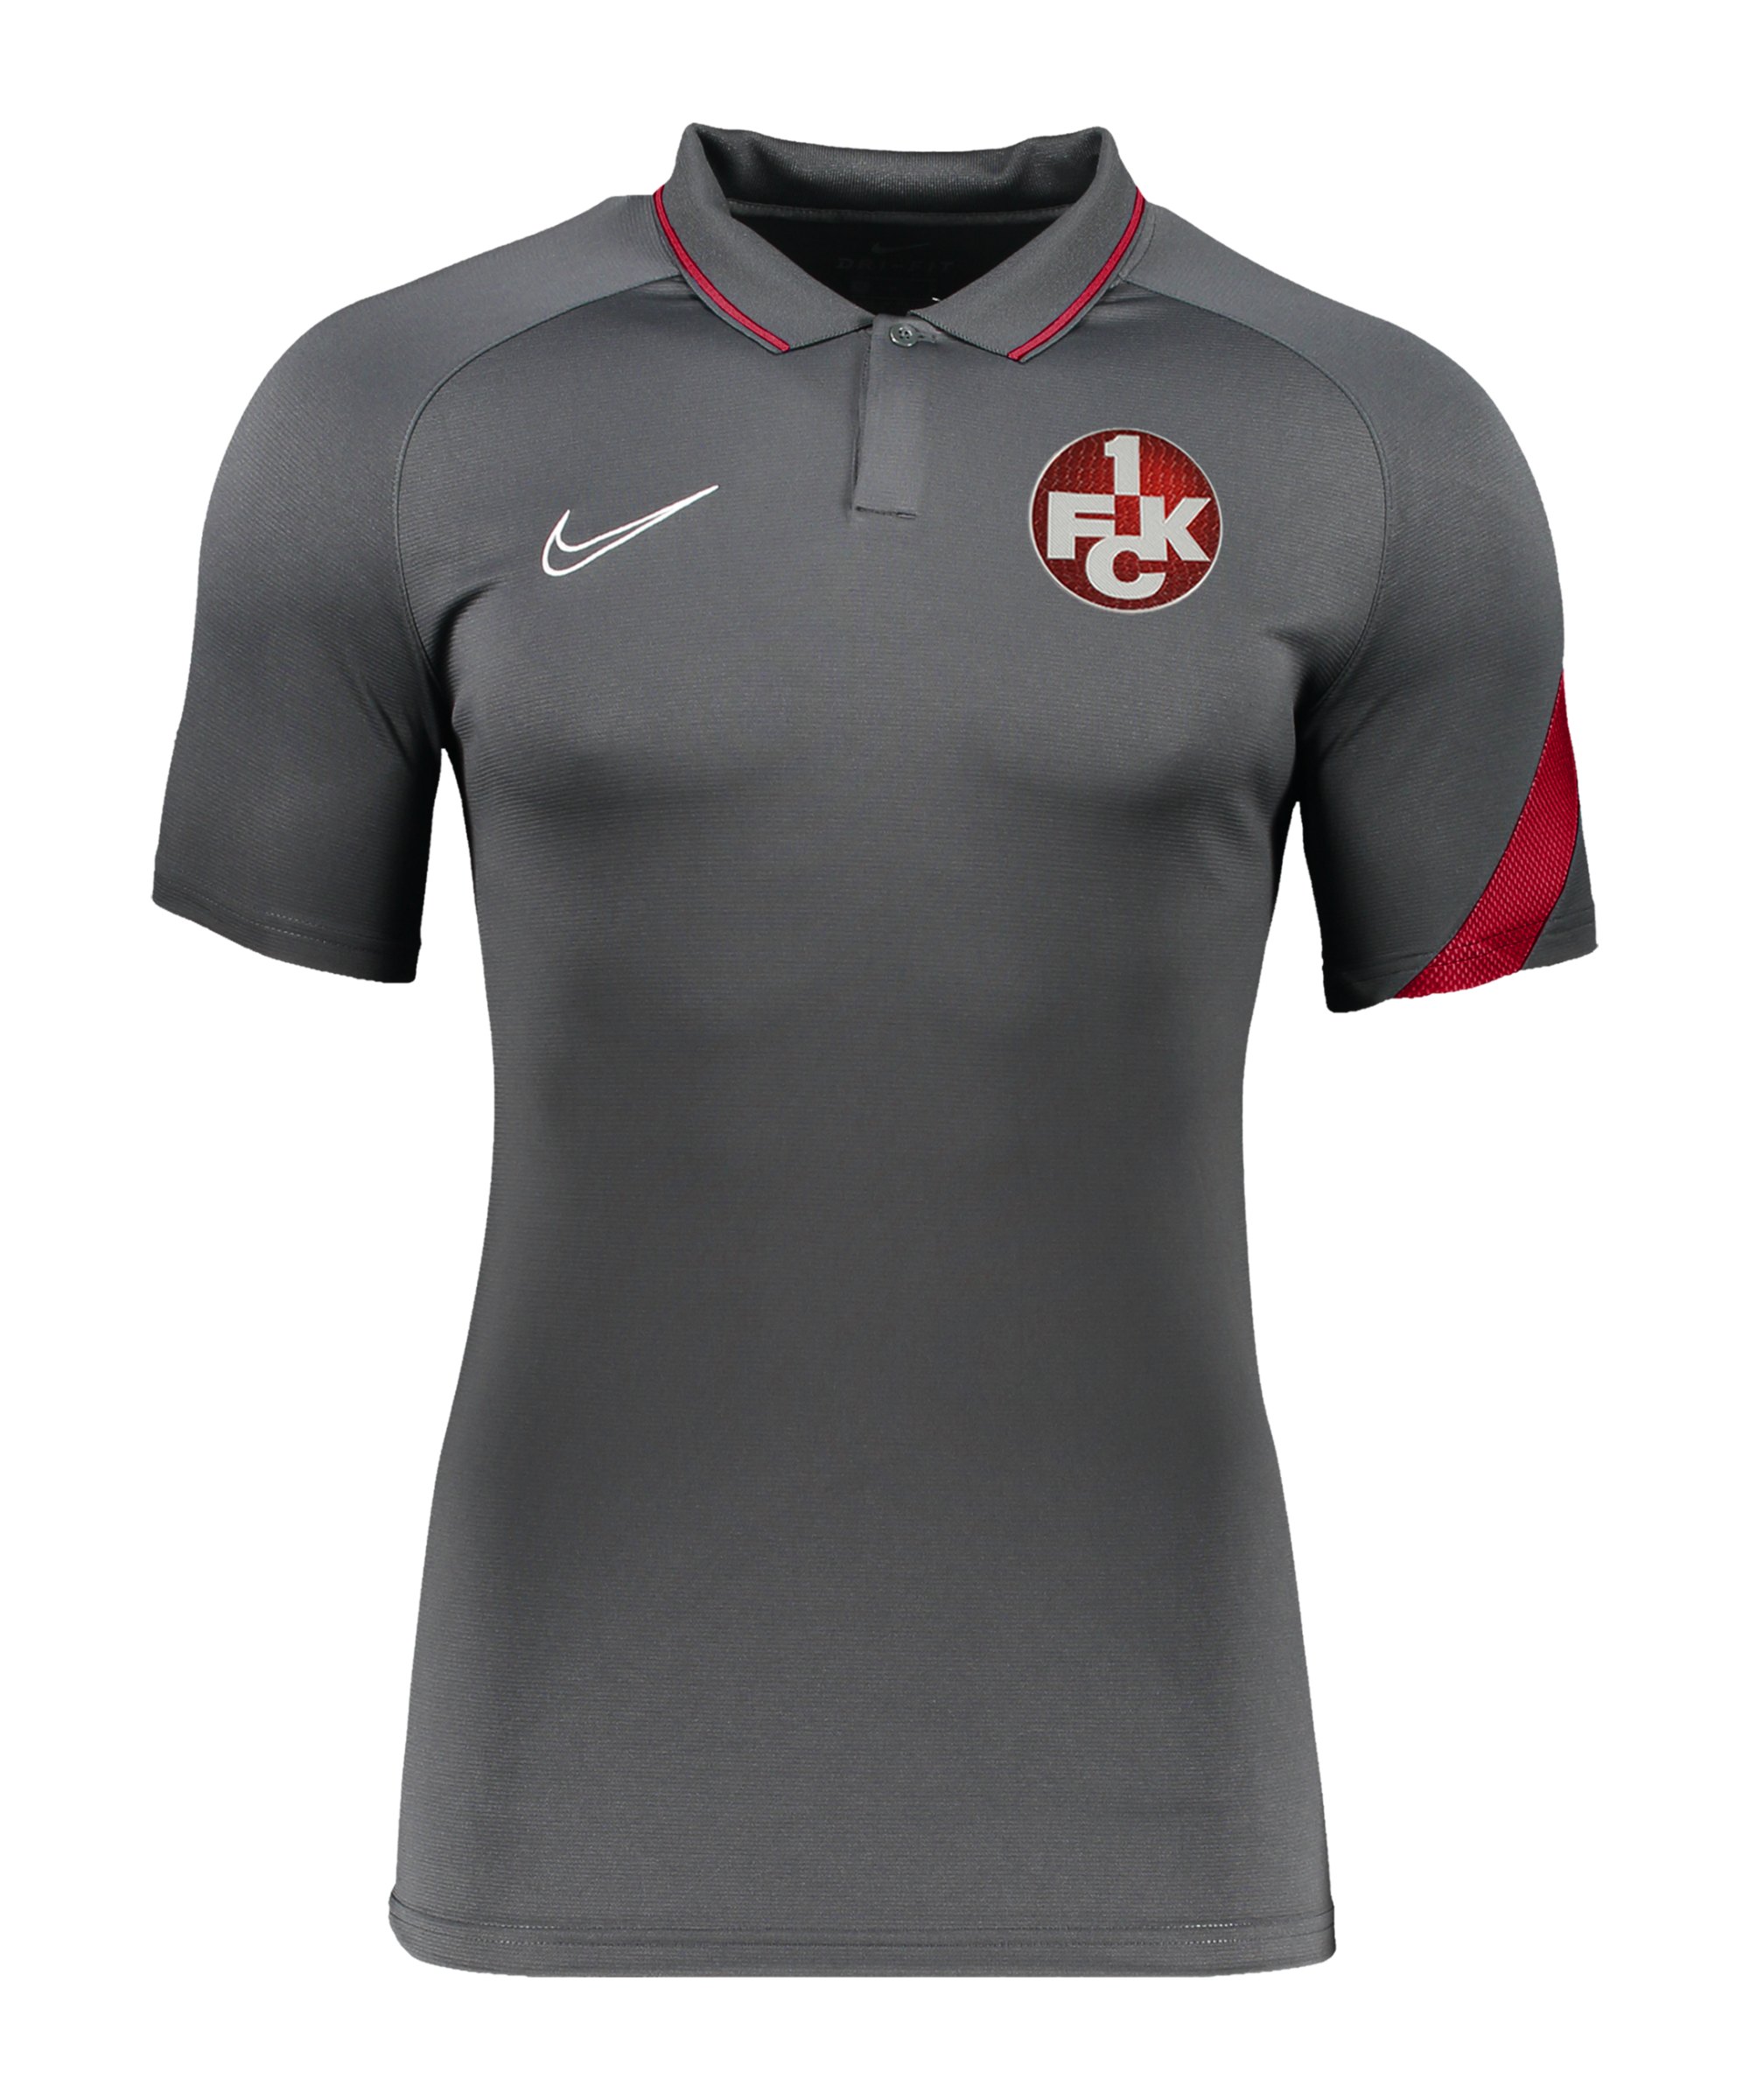 Nike 1. FC Kaiserslautern Poloshirt Kids F068 - grau